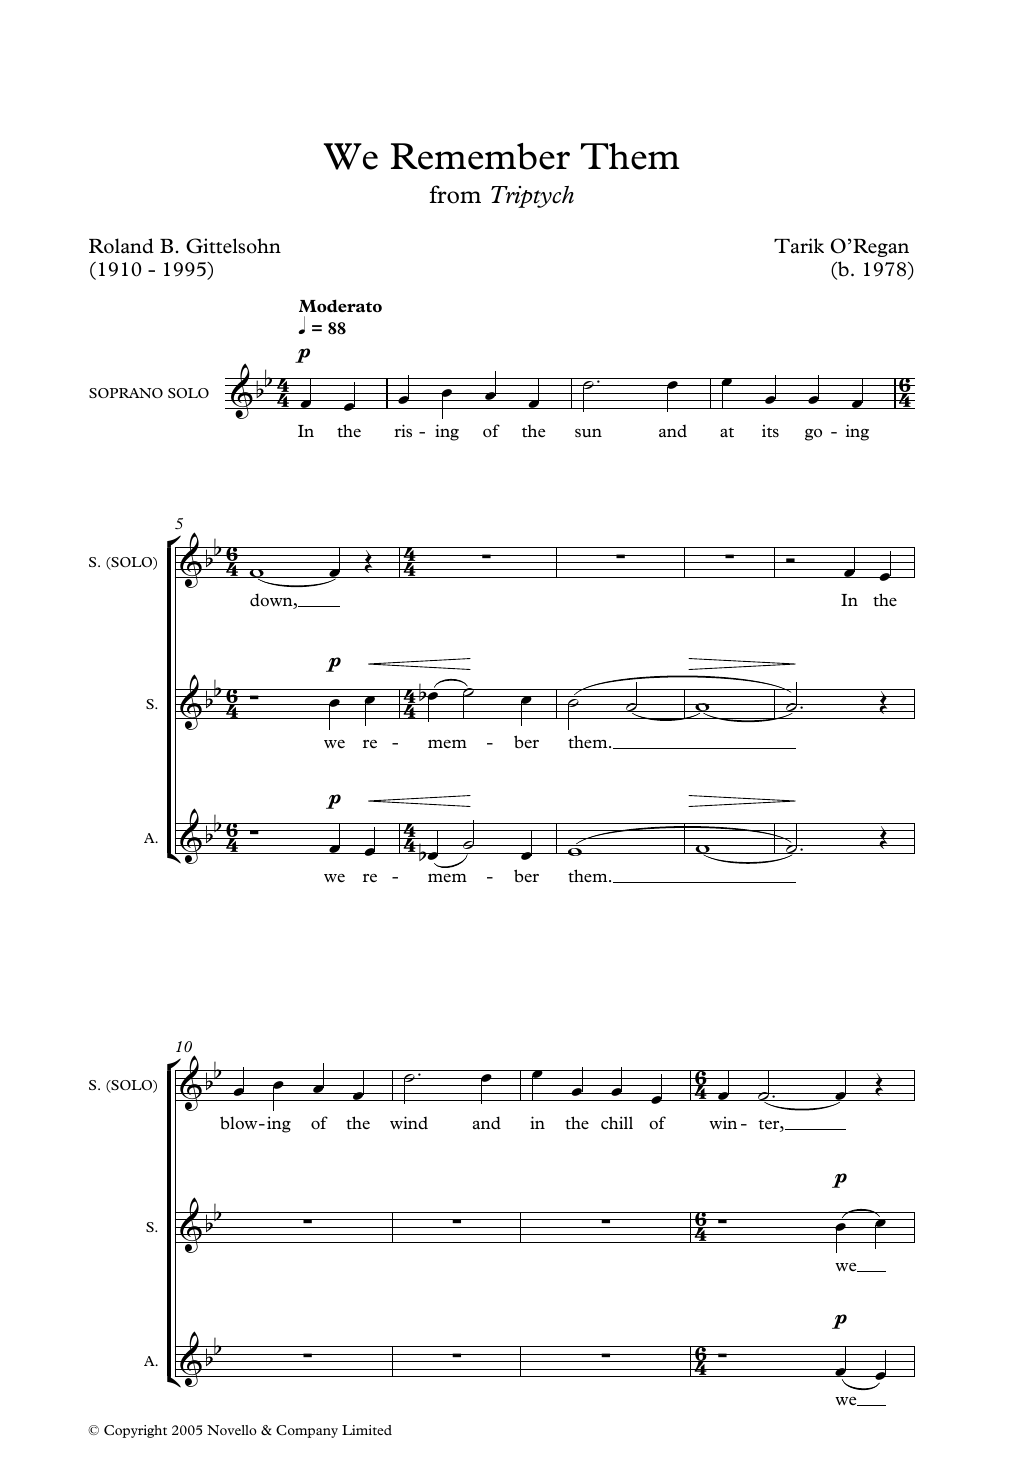 Download Tarik O'Regan We Remember Them Sheet Music and learn how to play SATB Choir PDF digital score in minutes